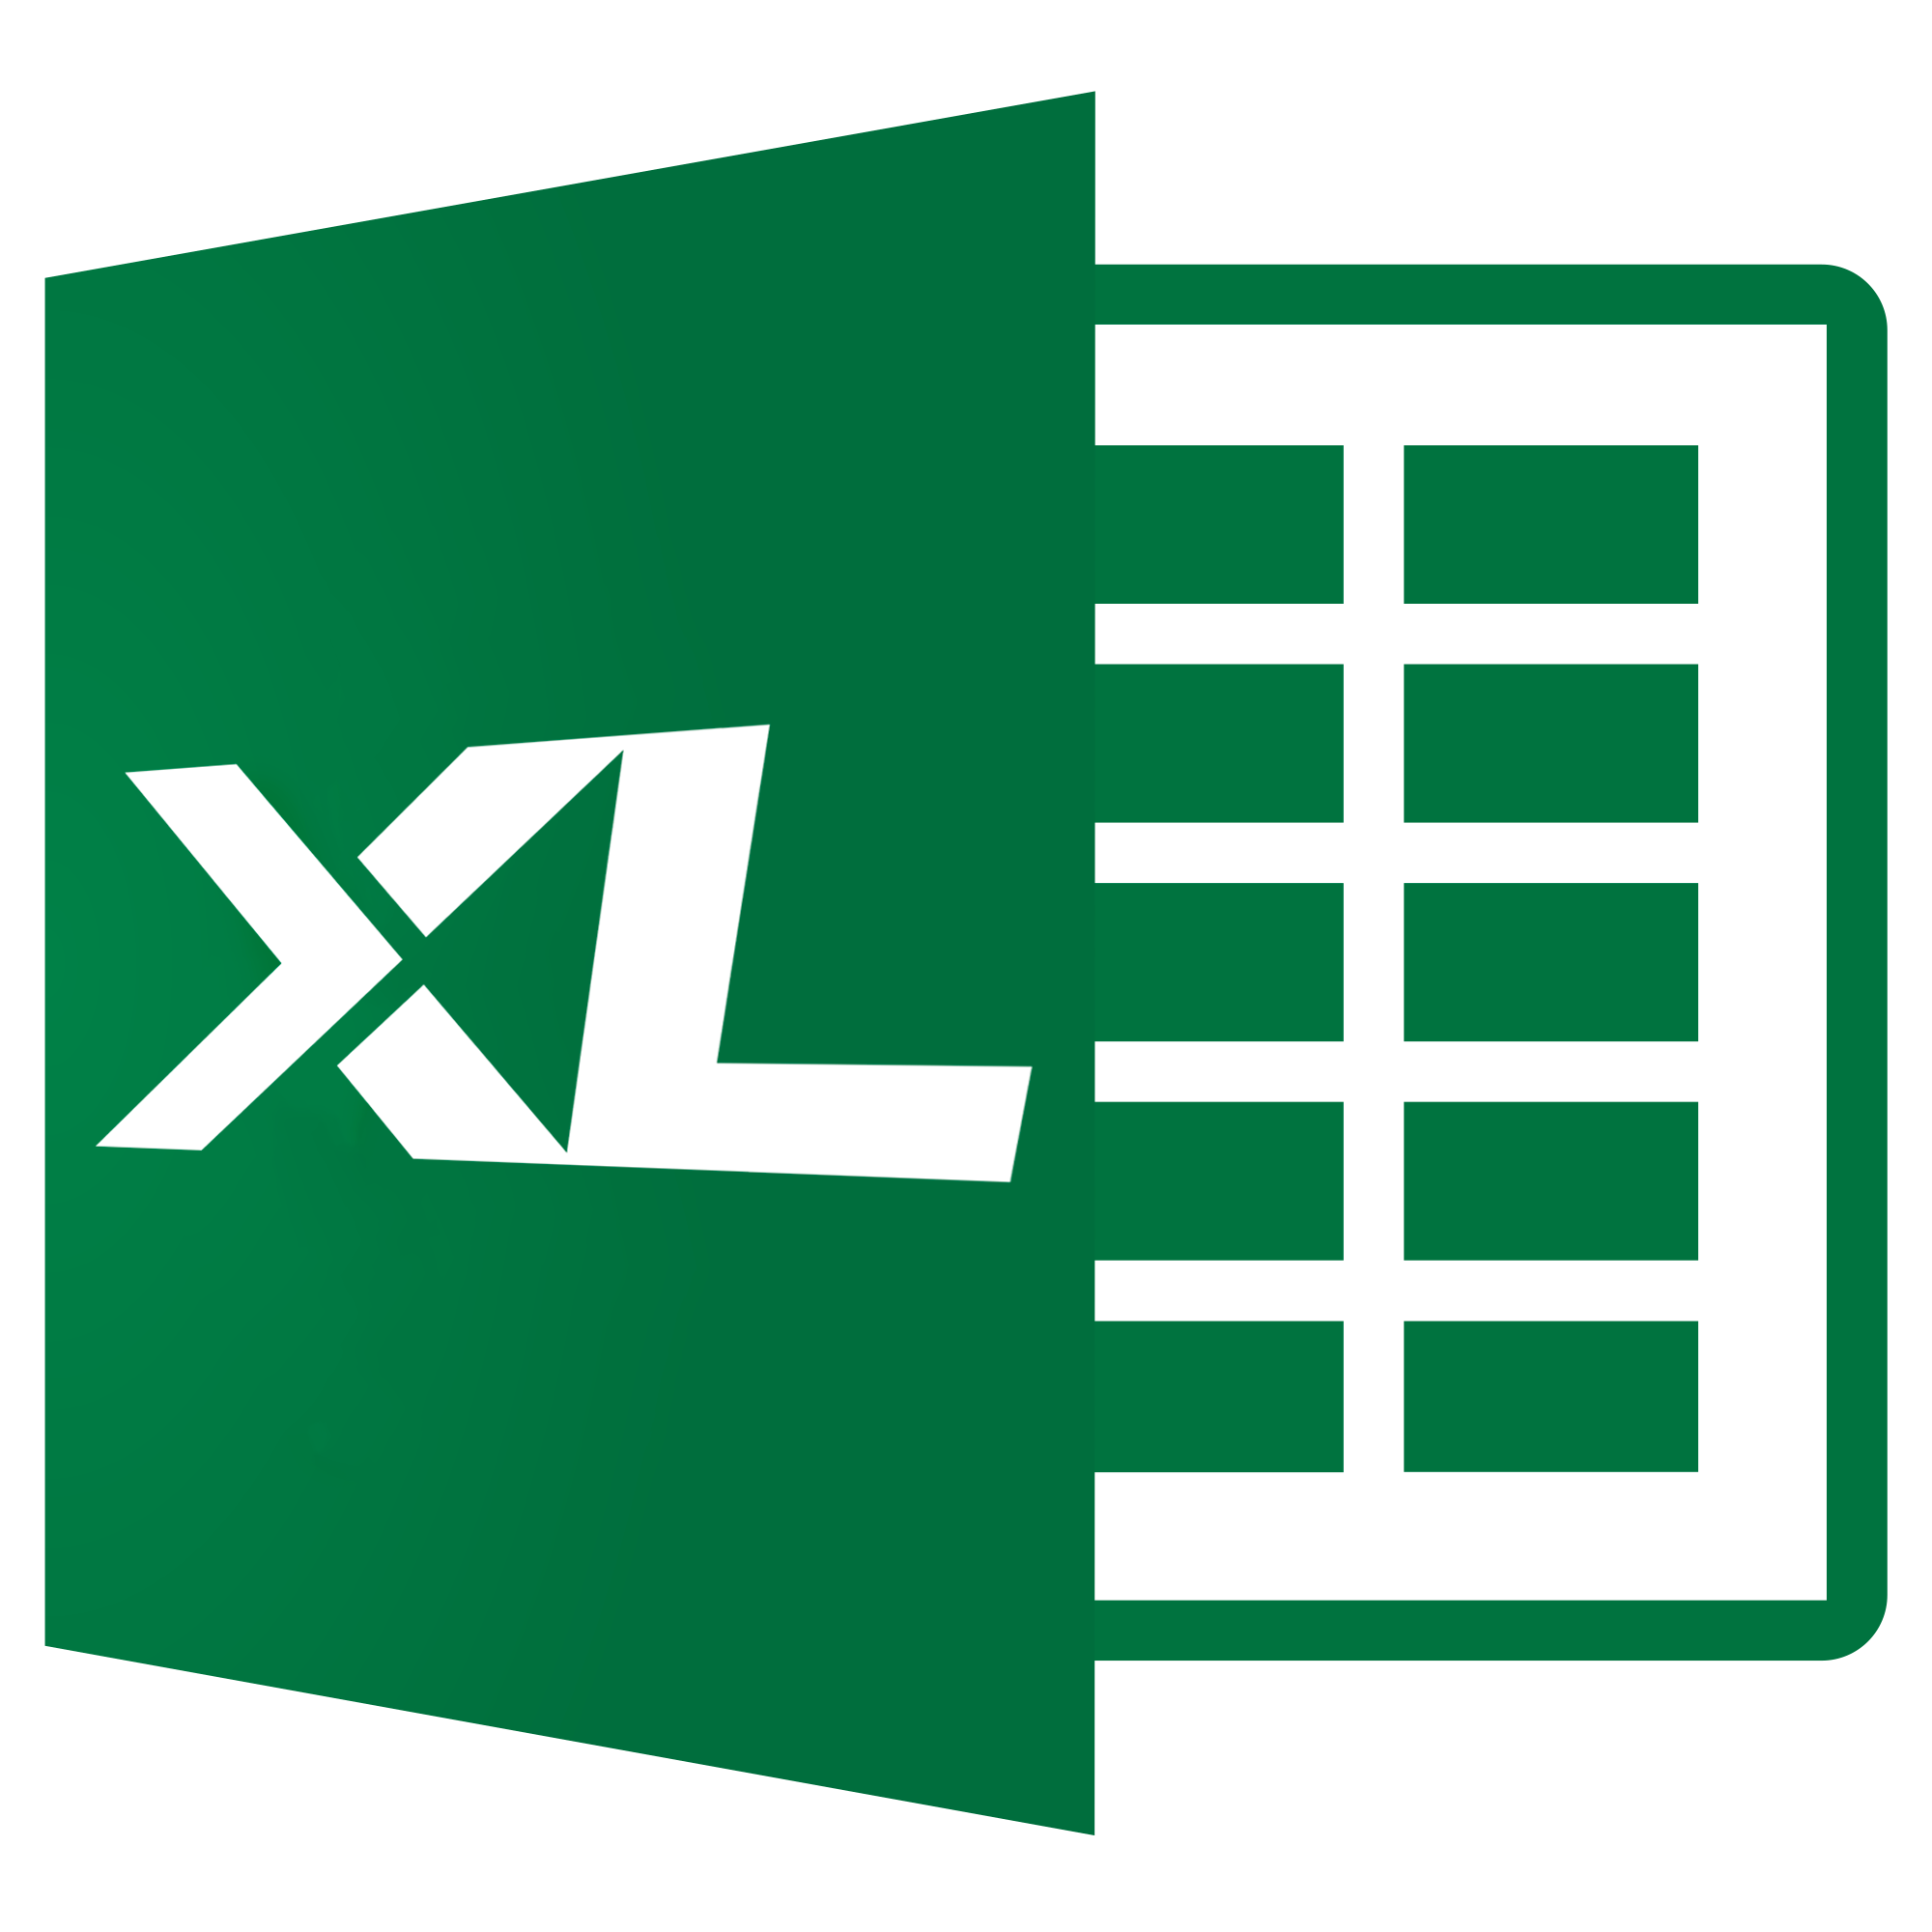 LBjqFgztpSU_Microsoft-Excel-Logo-2013-2019-.png